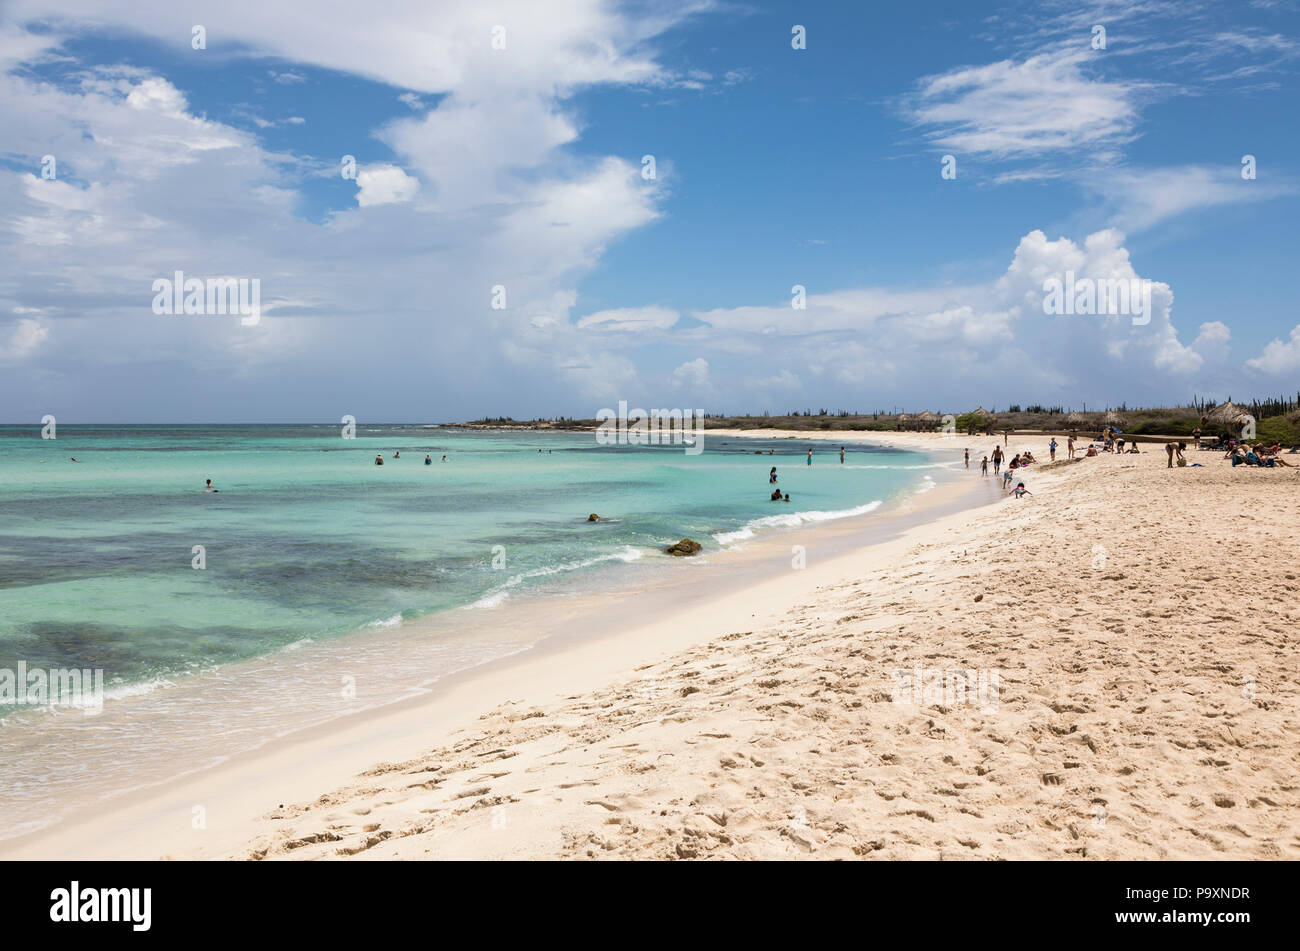 Arashi Beach - una idilliaca spiaggia di sabbia bianca sull'isola caraibica di Aruba, Caraibi Foto Stock